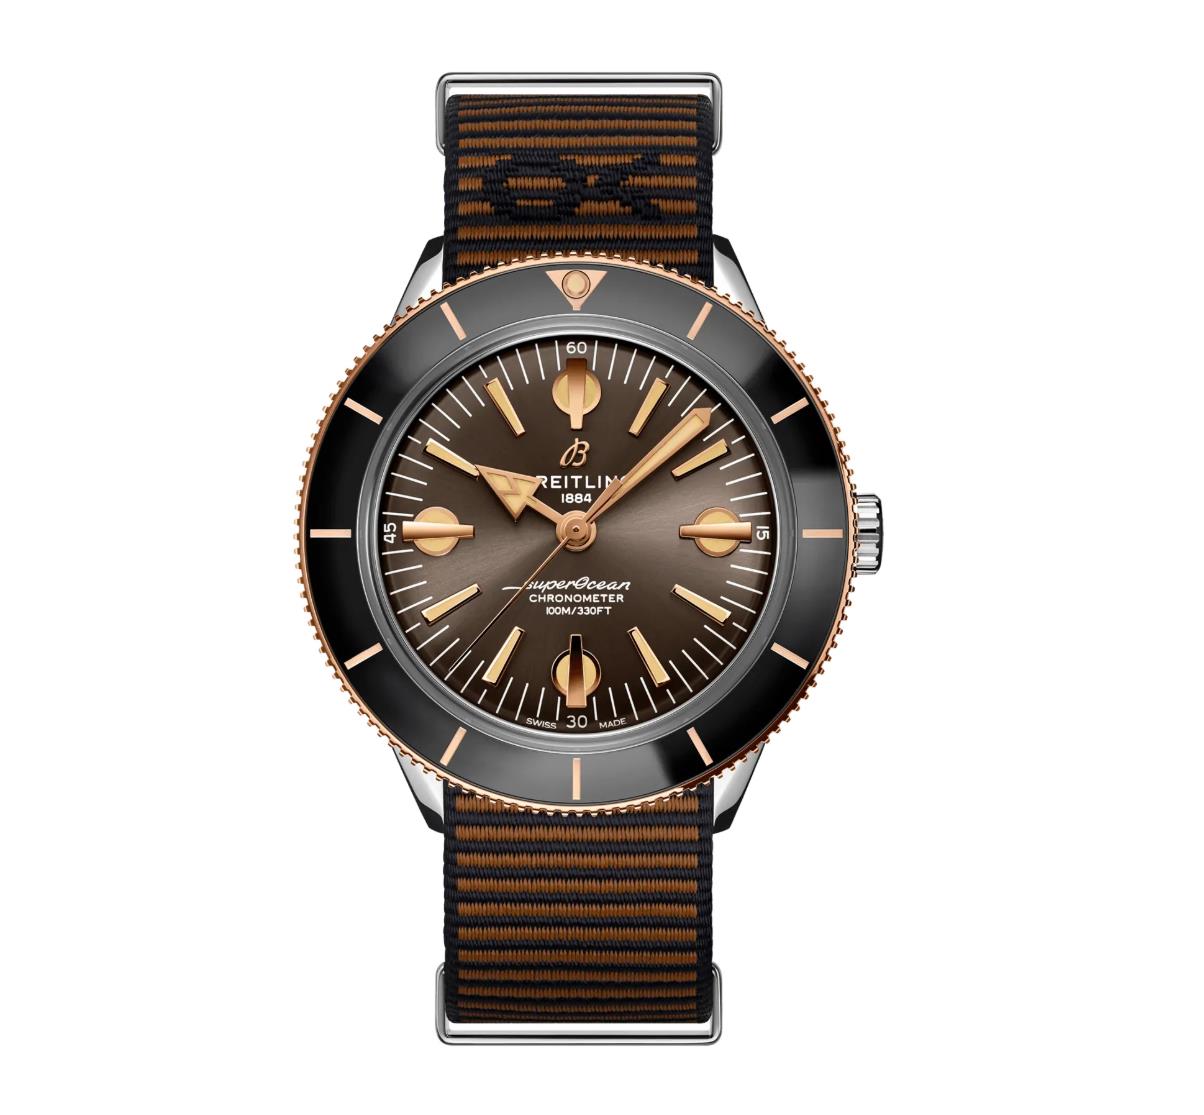 The waterproof fake watch has a brown dial.